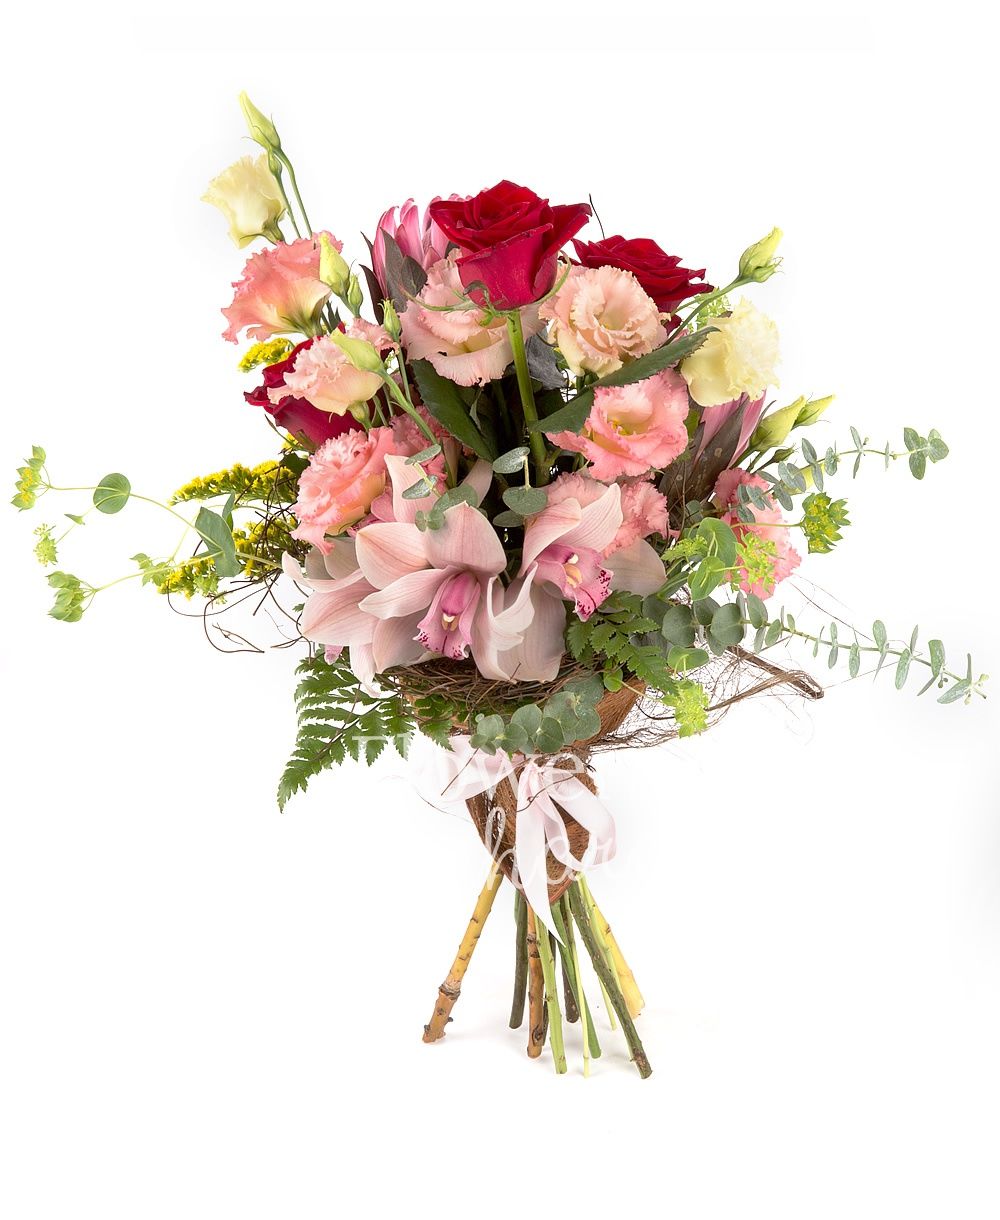 3 red roses, 2 proteea, 3 pink lisianthus, 2 solidago, pink cymbidium, 2 bupleurum, greenery